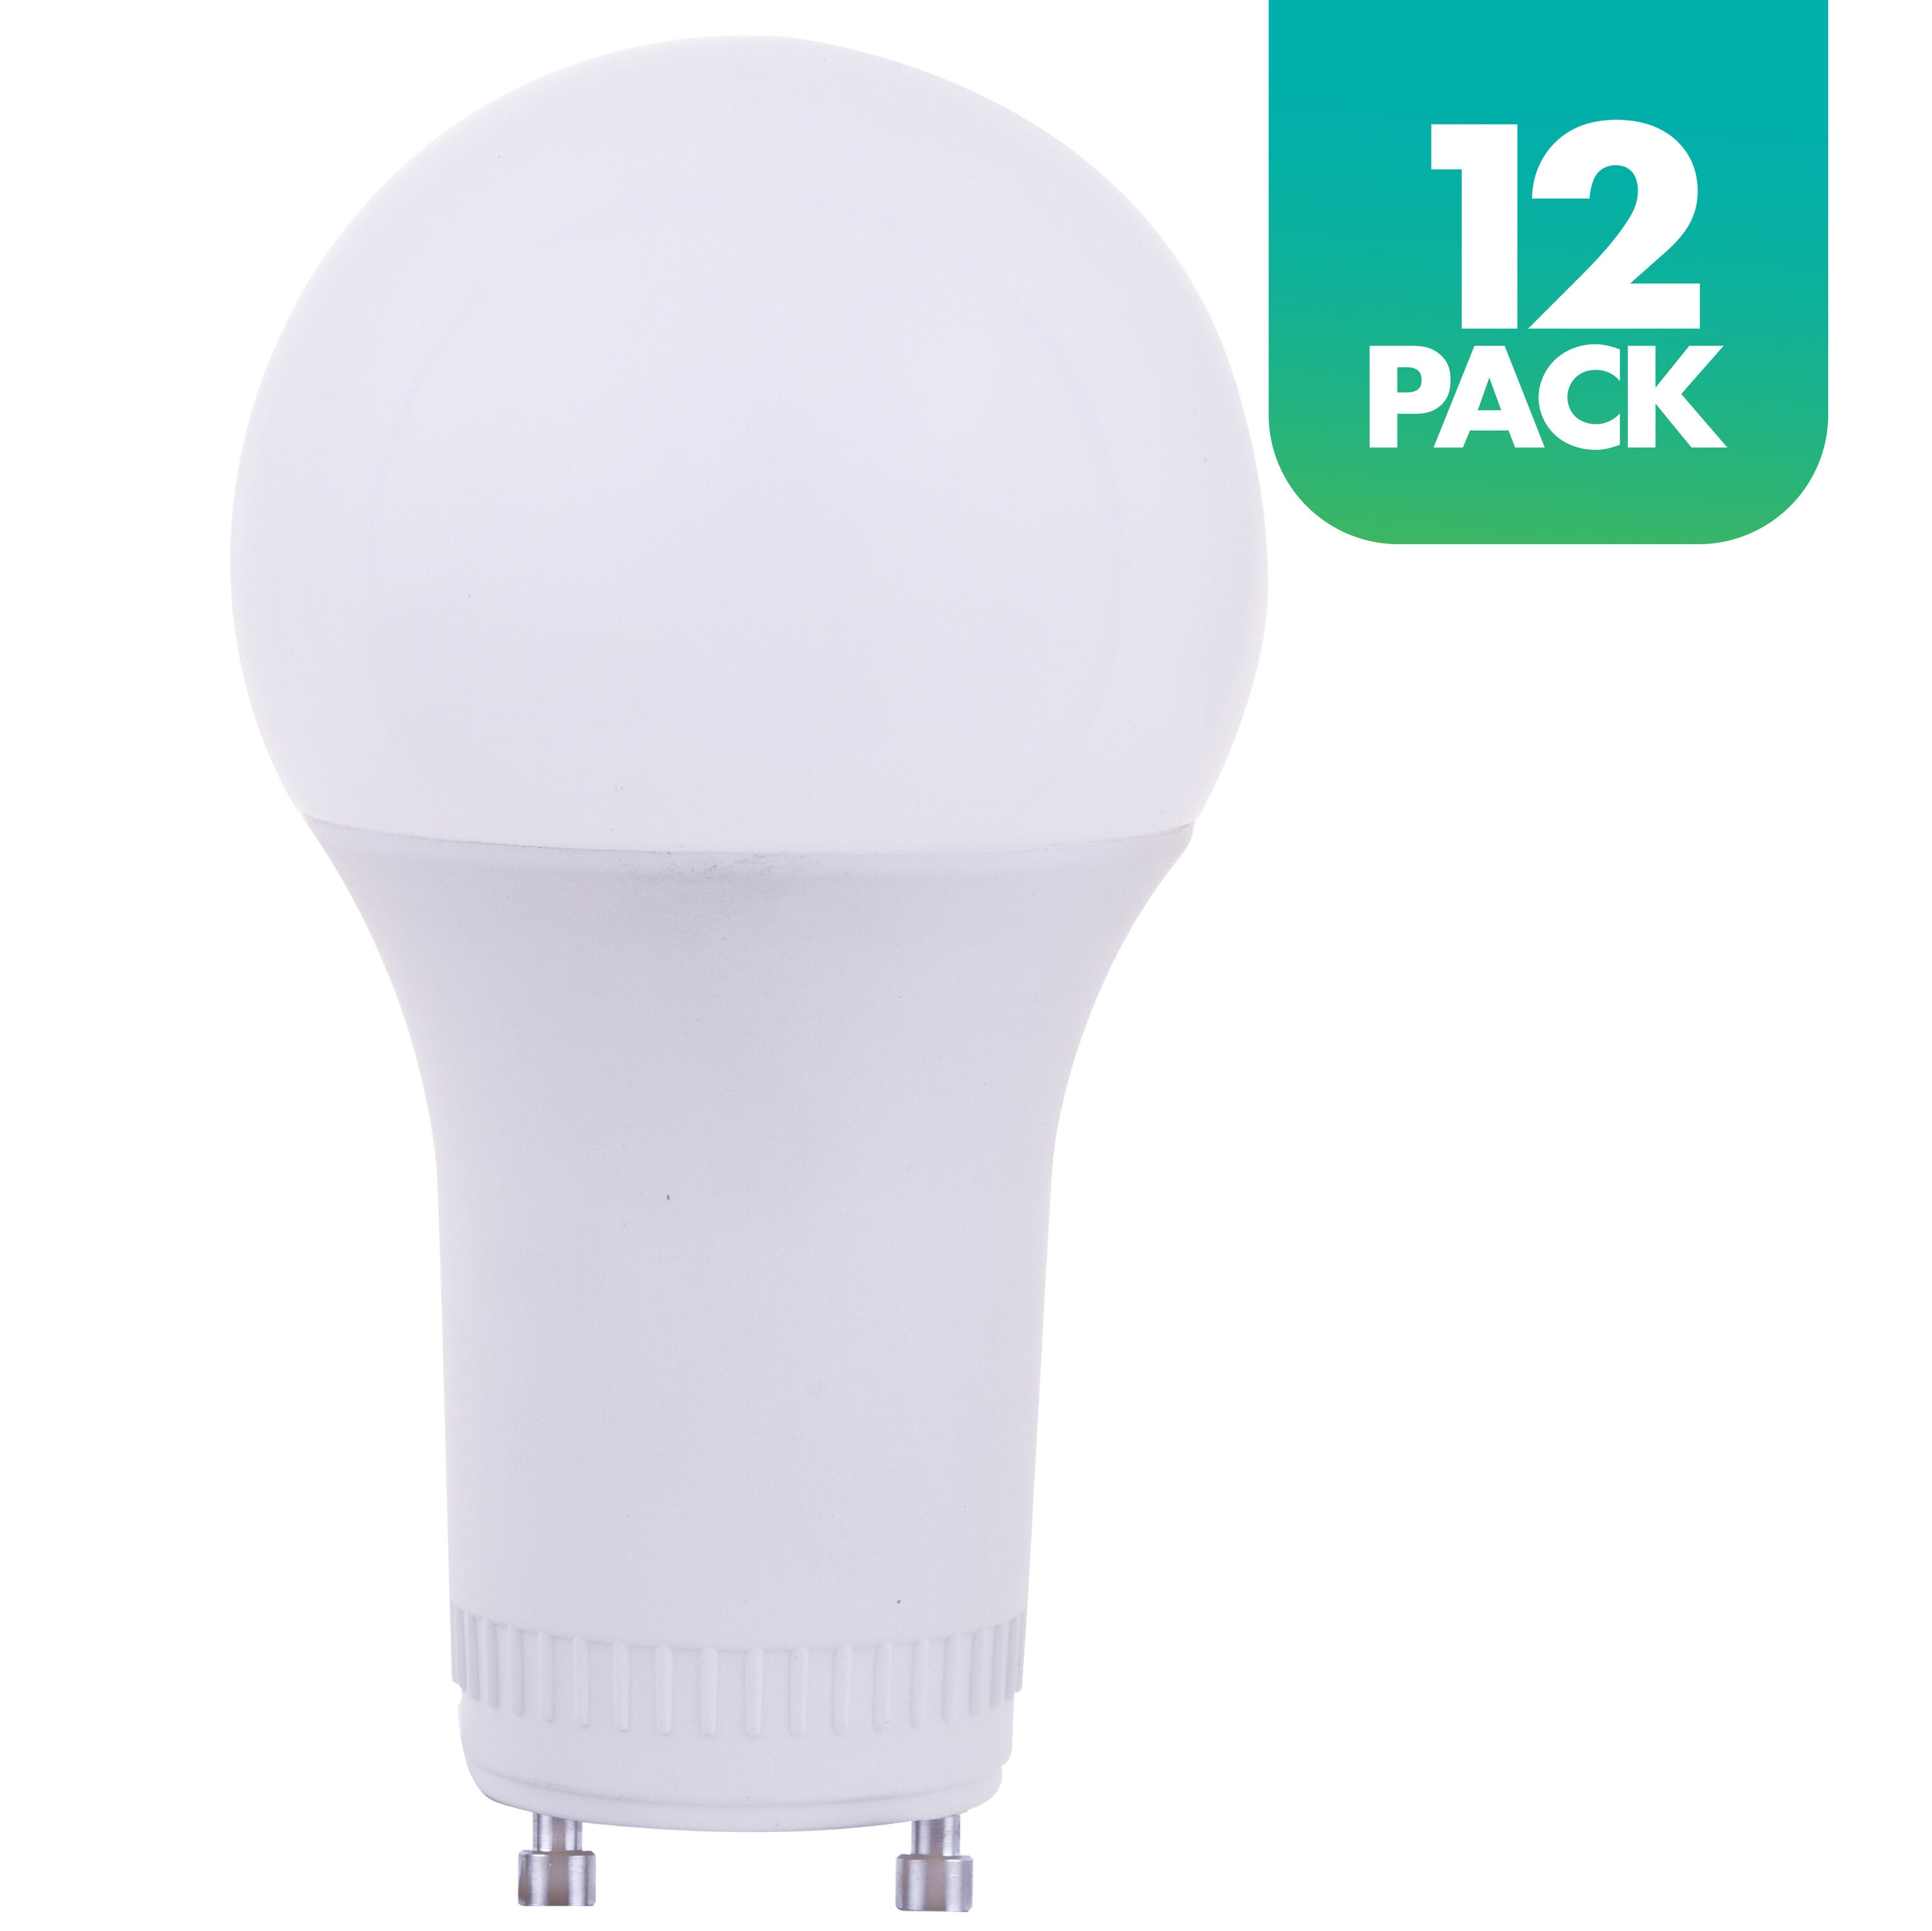 10w 12v LED Bulb Cool White, A19 Small Size, 900 Lumens